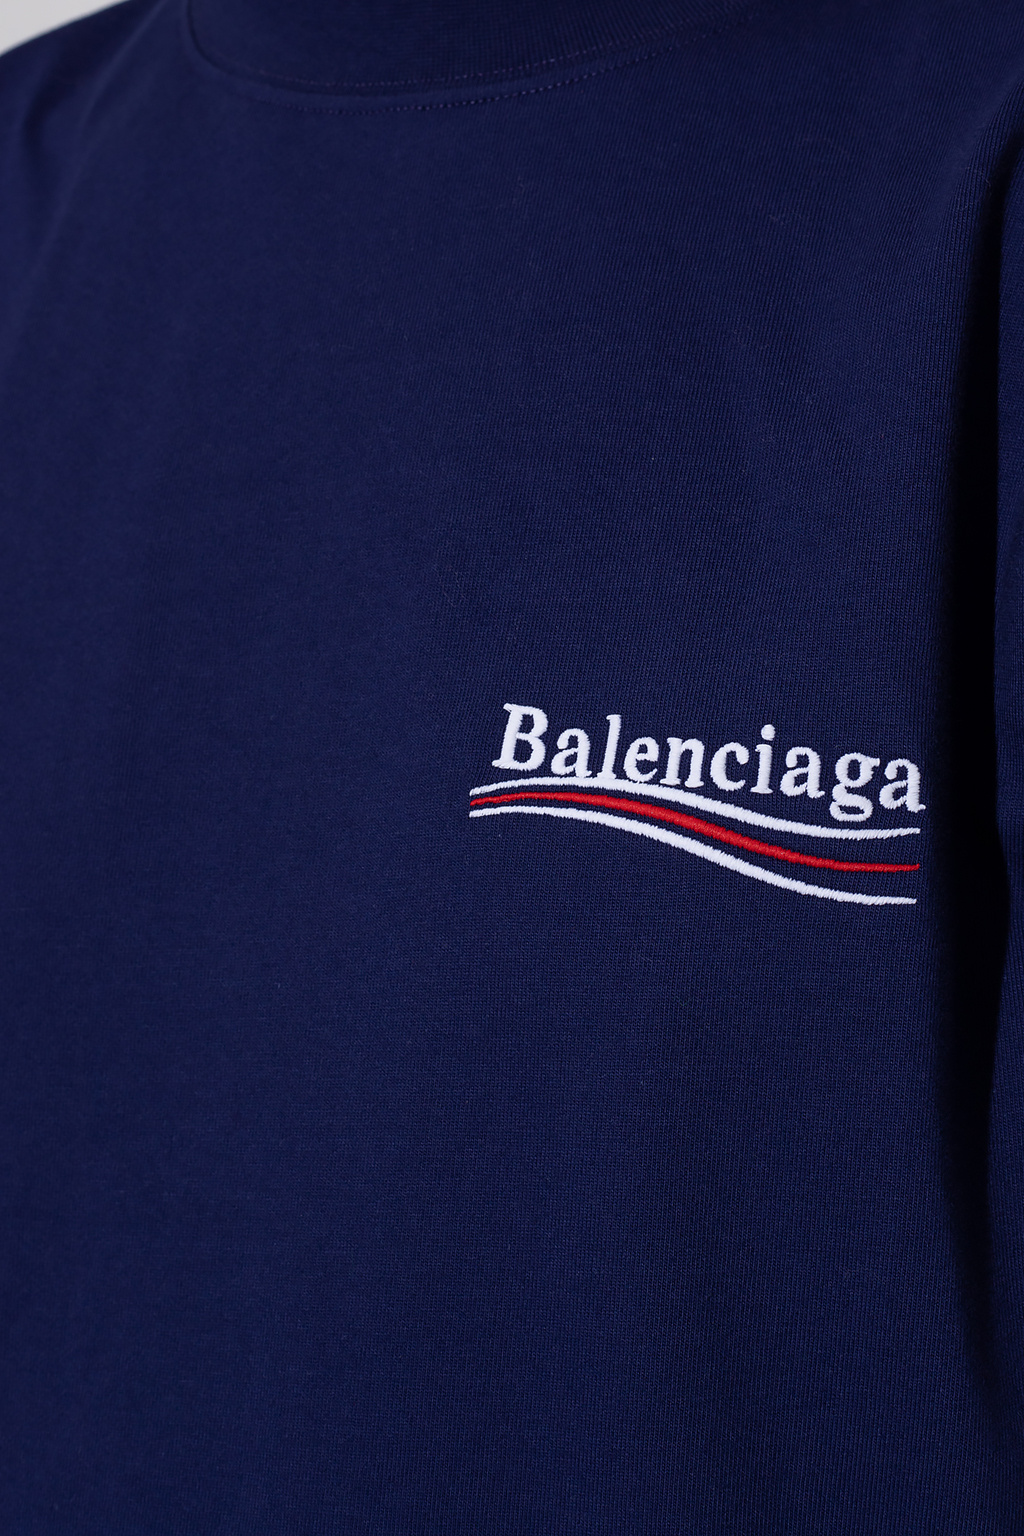 Balenciaga saige long sleeve rugby shirt